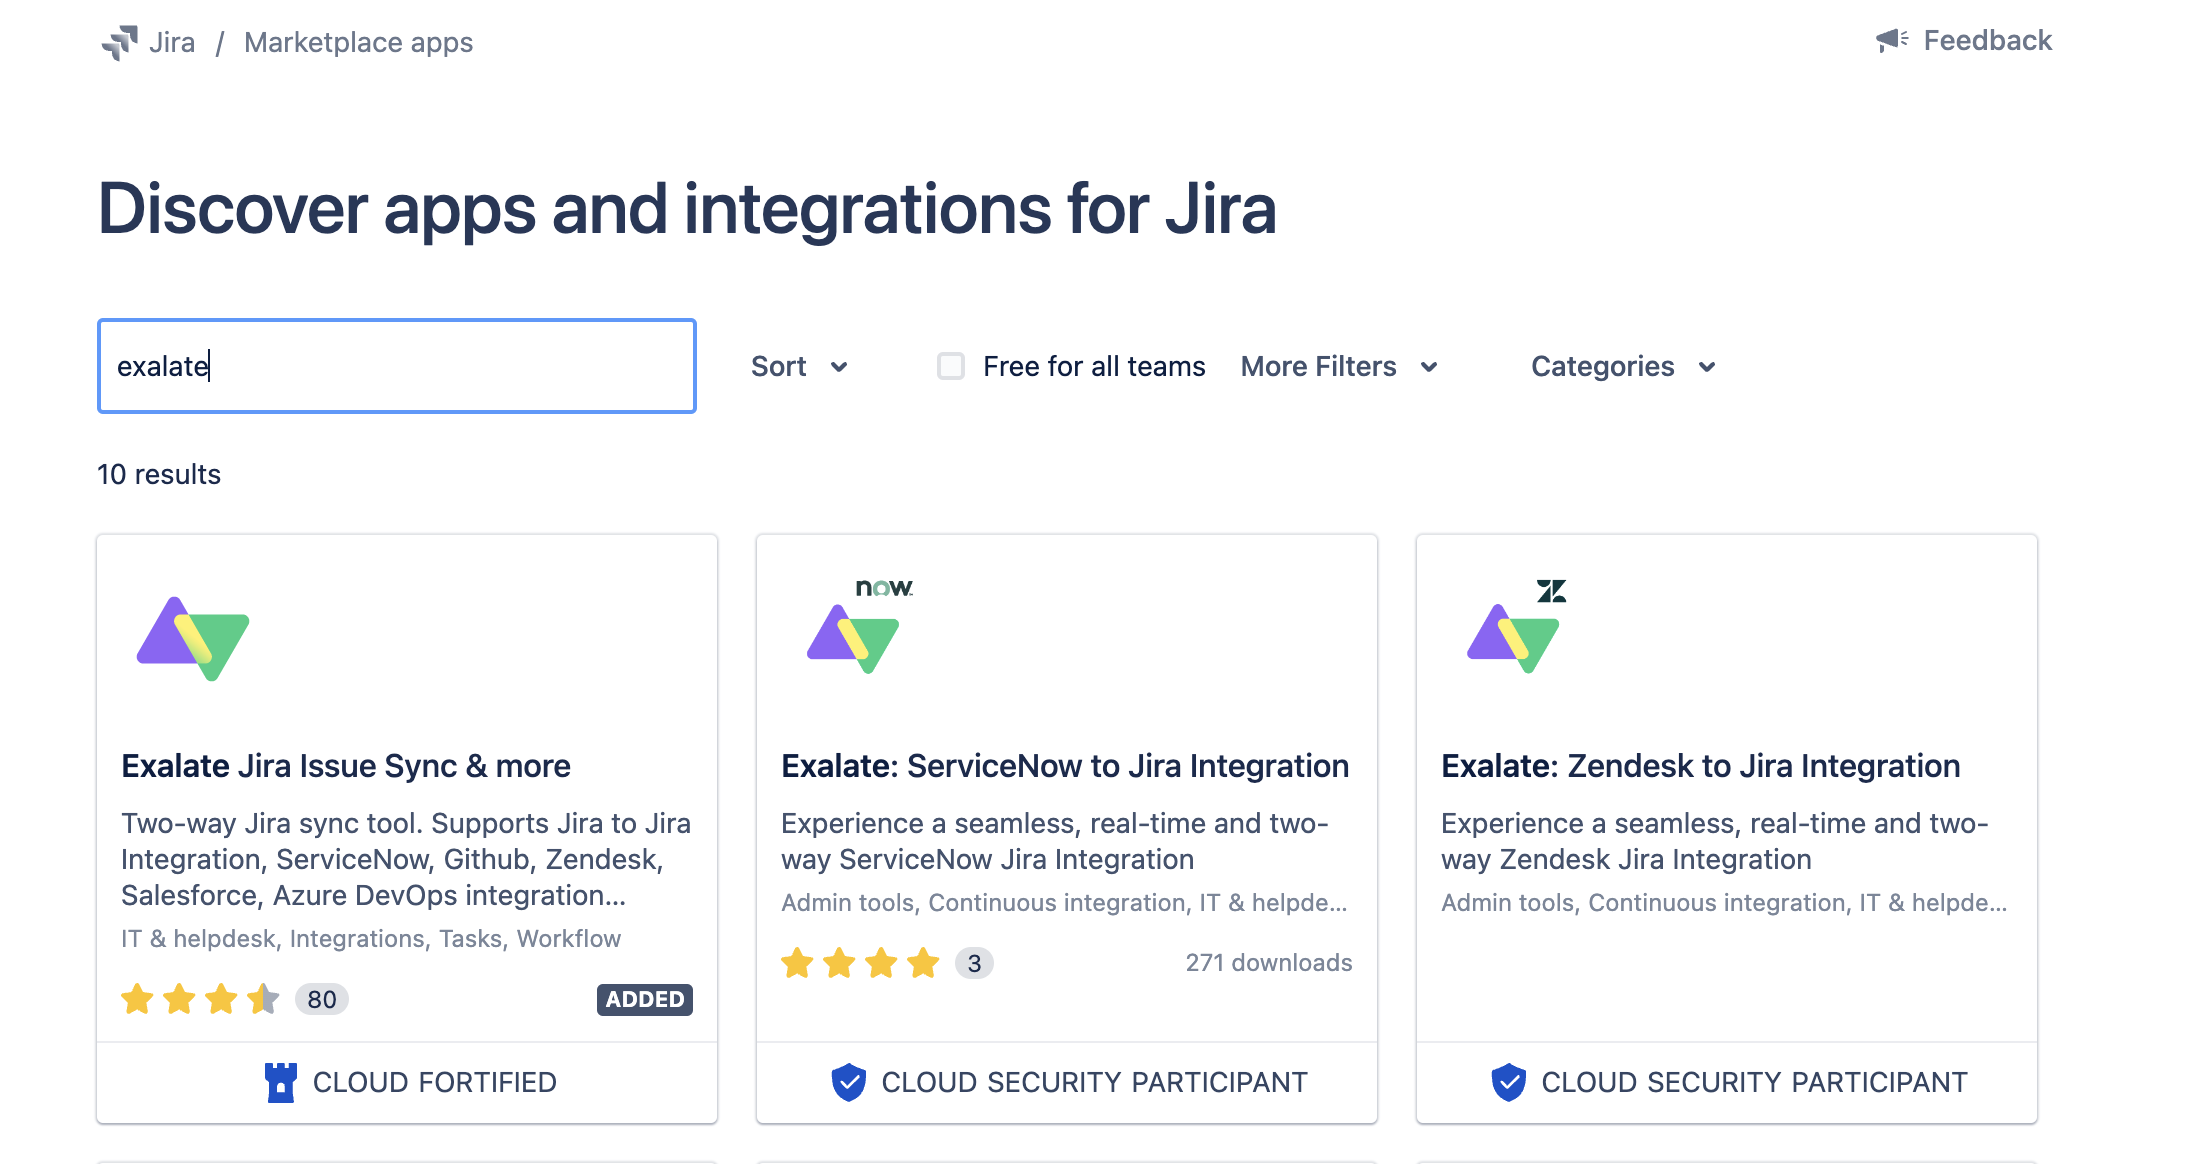 Exalate for Jira integrations